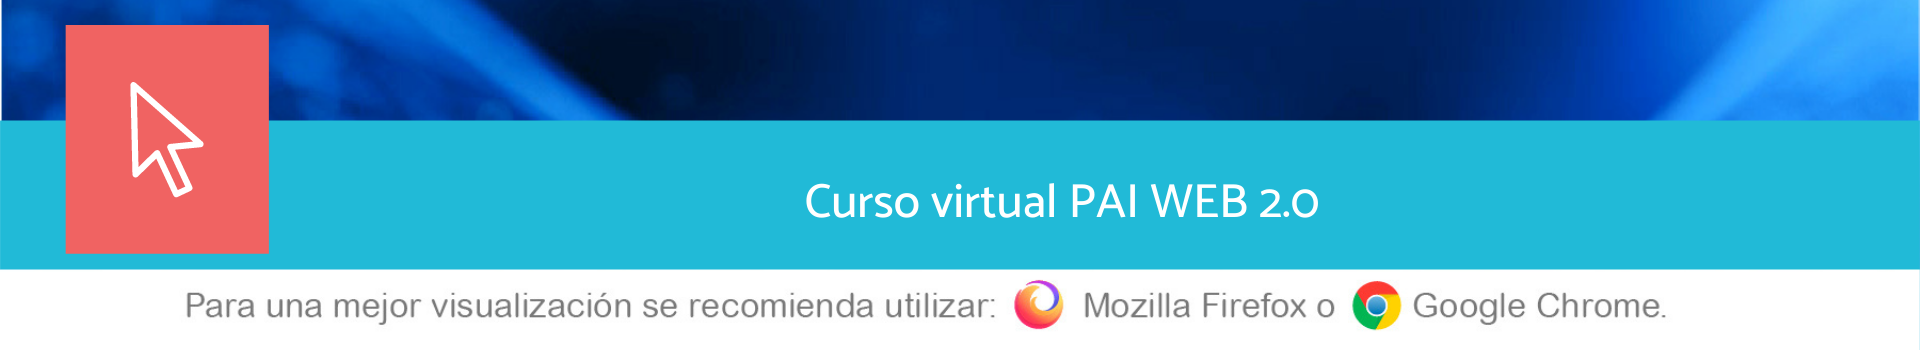 Curso virtual PAI WEB 2.0